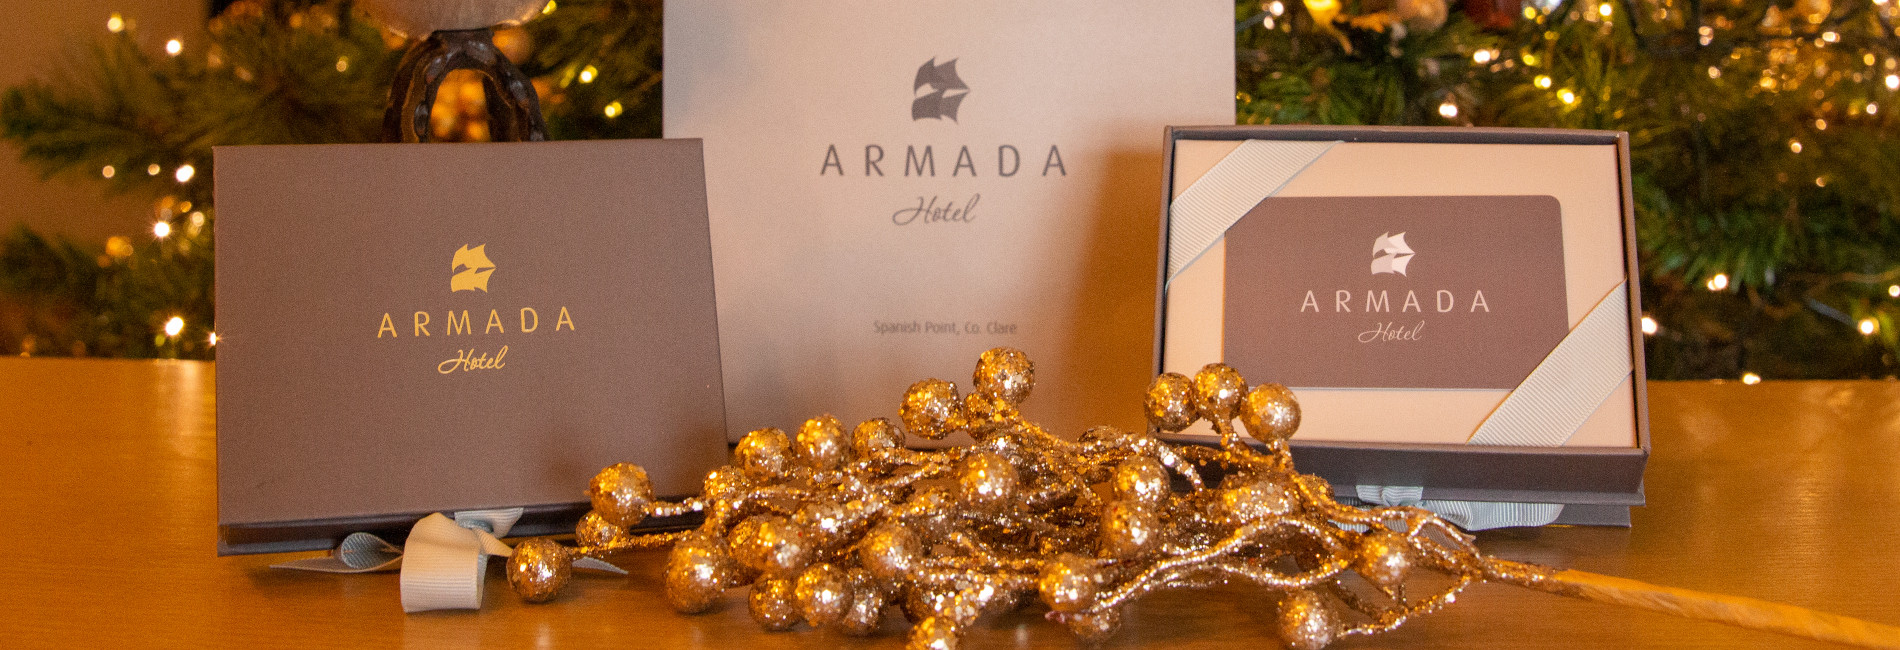 Armada gift card landscape desktop www.armadahotel.com_v2